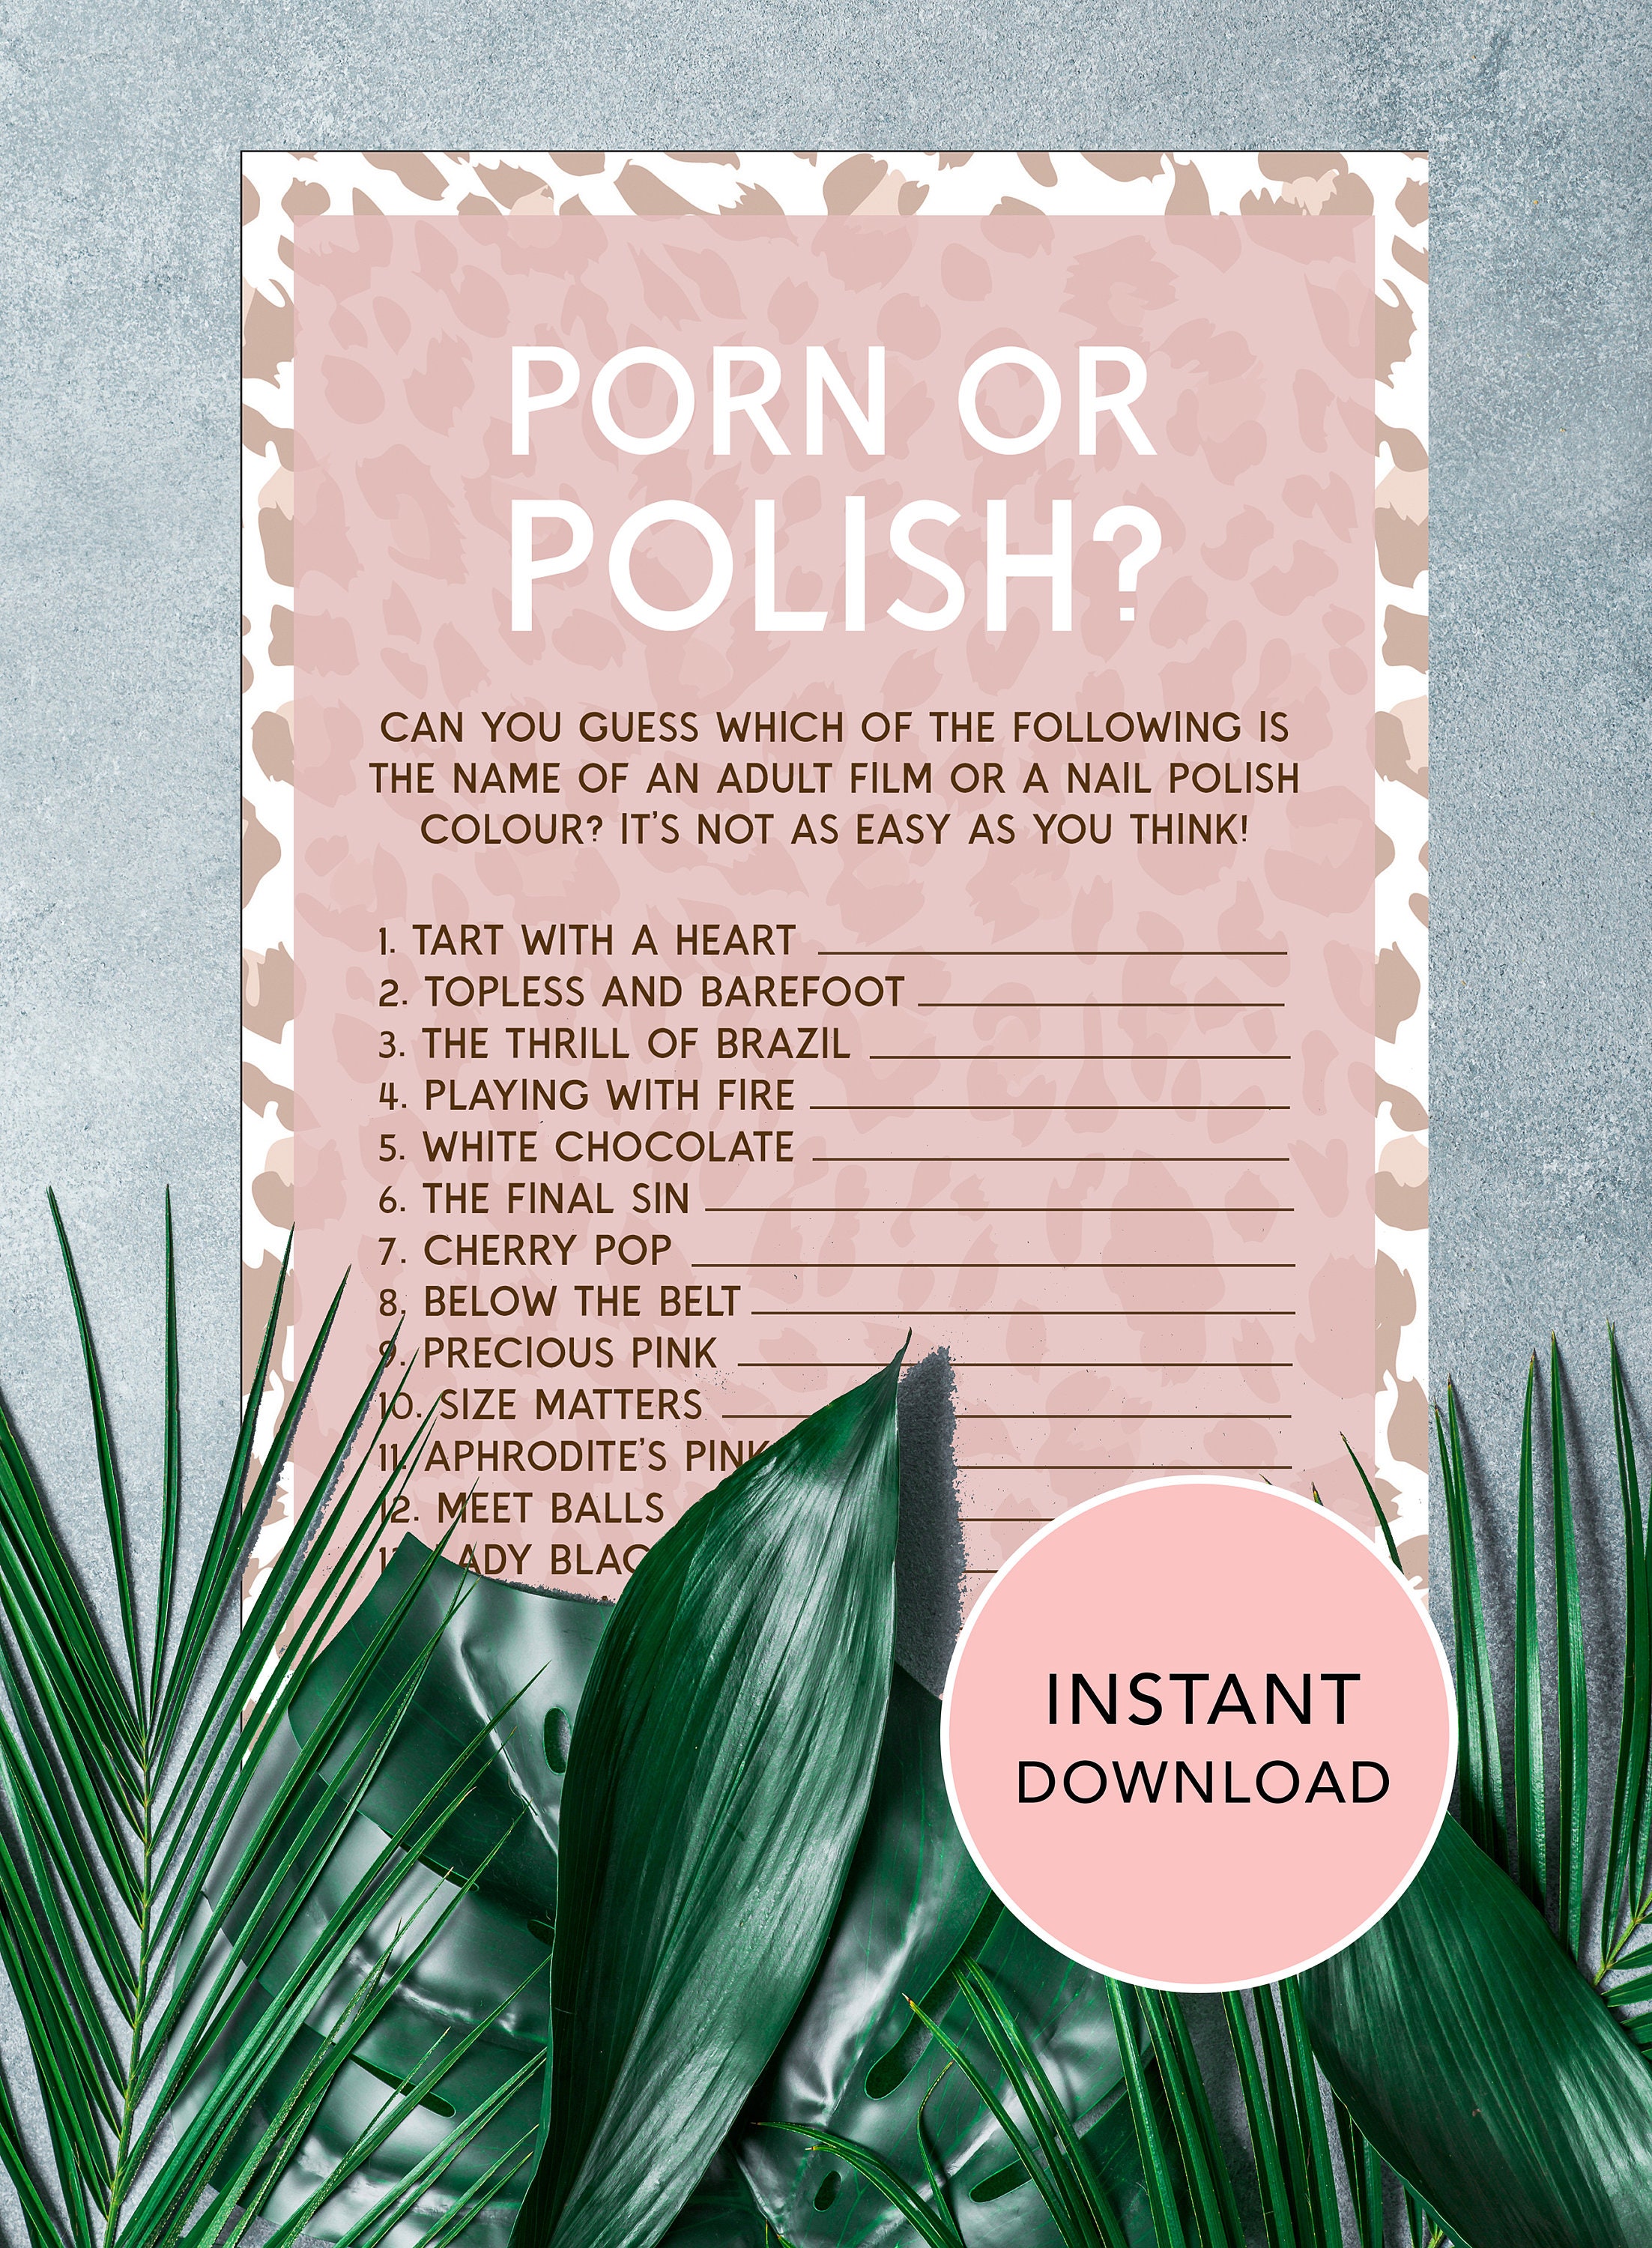 Polish Animal Porn - Porn or Polish Bride Game Bridal Shower Game Animal Print - Etsy Canada